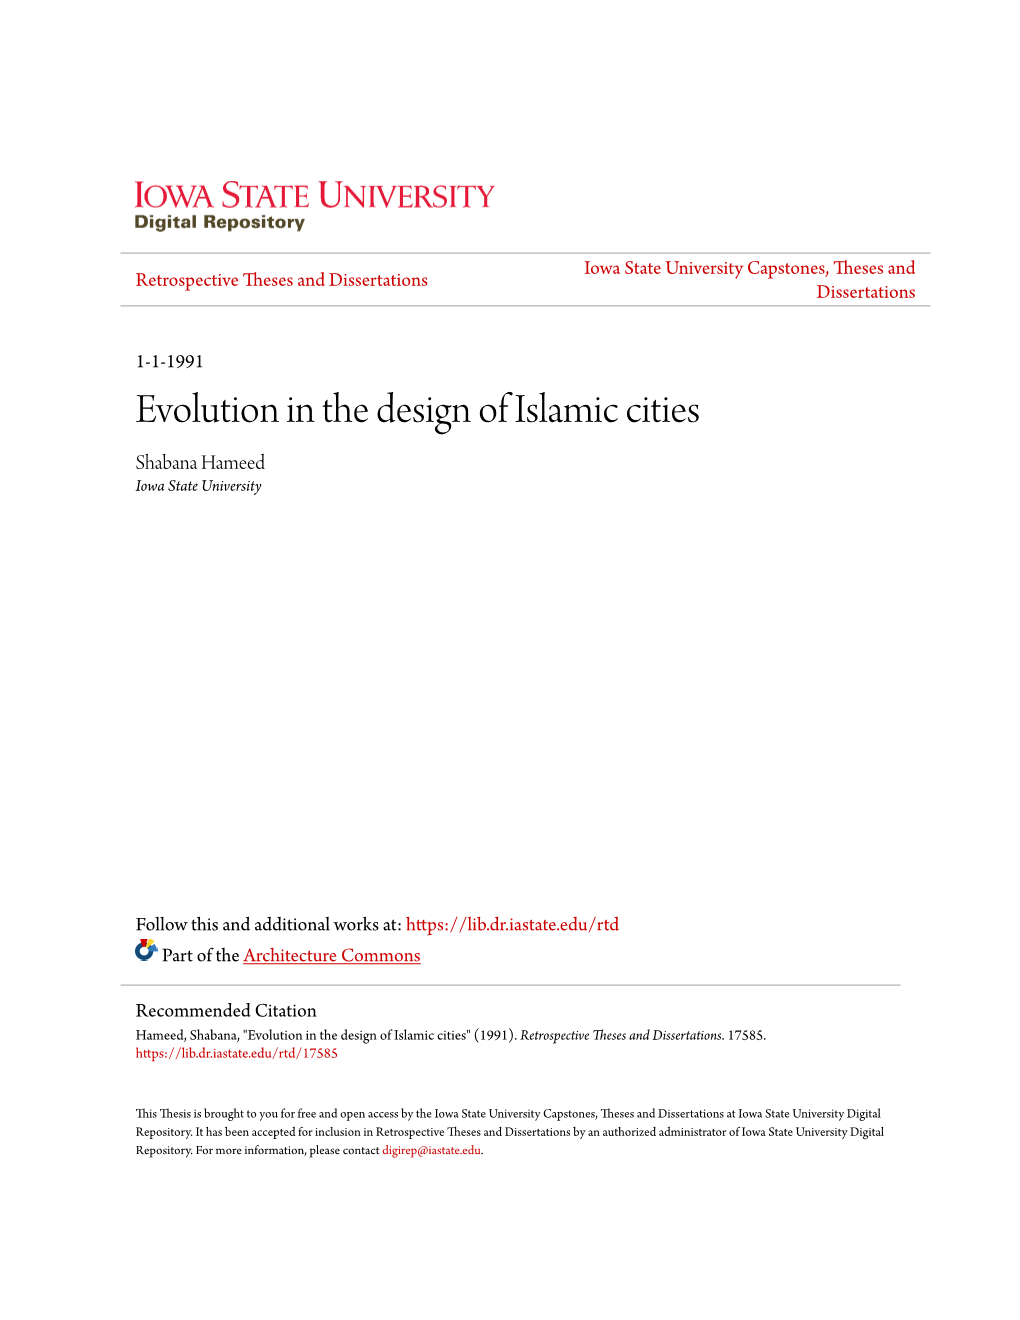 Evolution in the Design of Islamic Cities Shabana Hameed Iowa State University